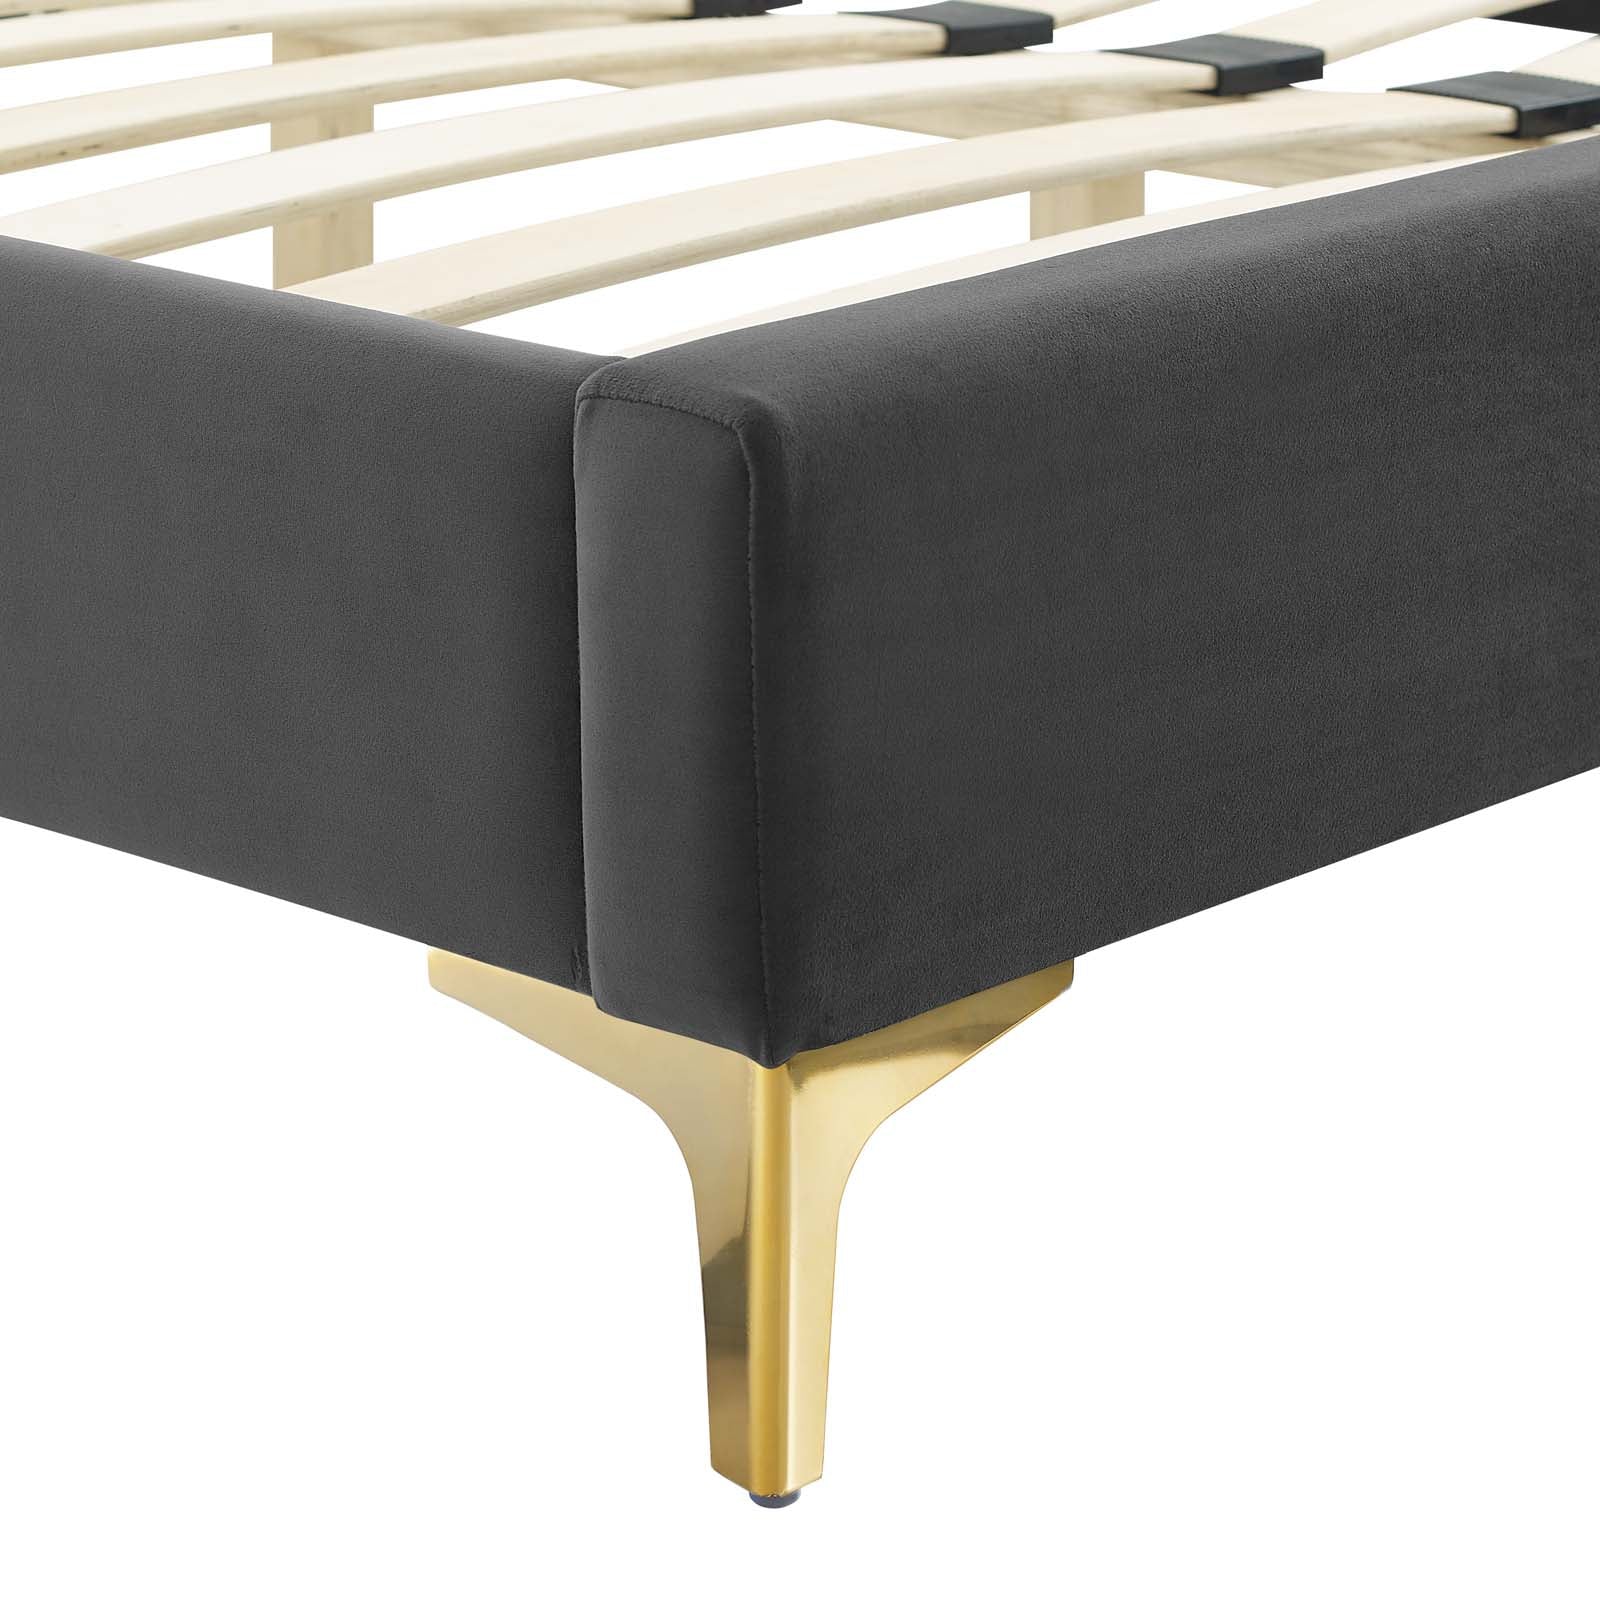 Current Performance Velvet Platform Bed With Gold Metal Legs - East Shore Modern Home Furnishings